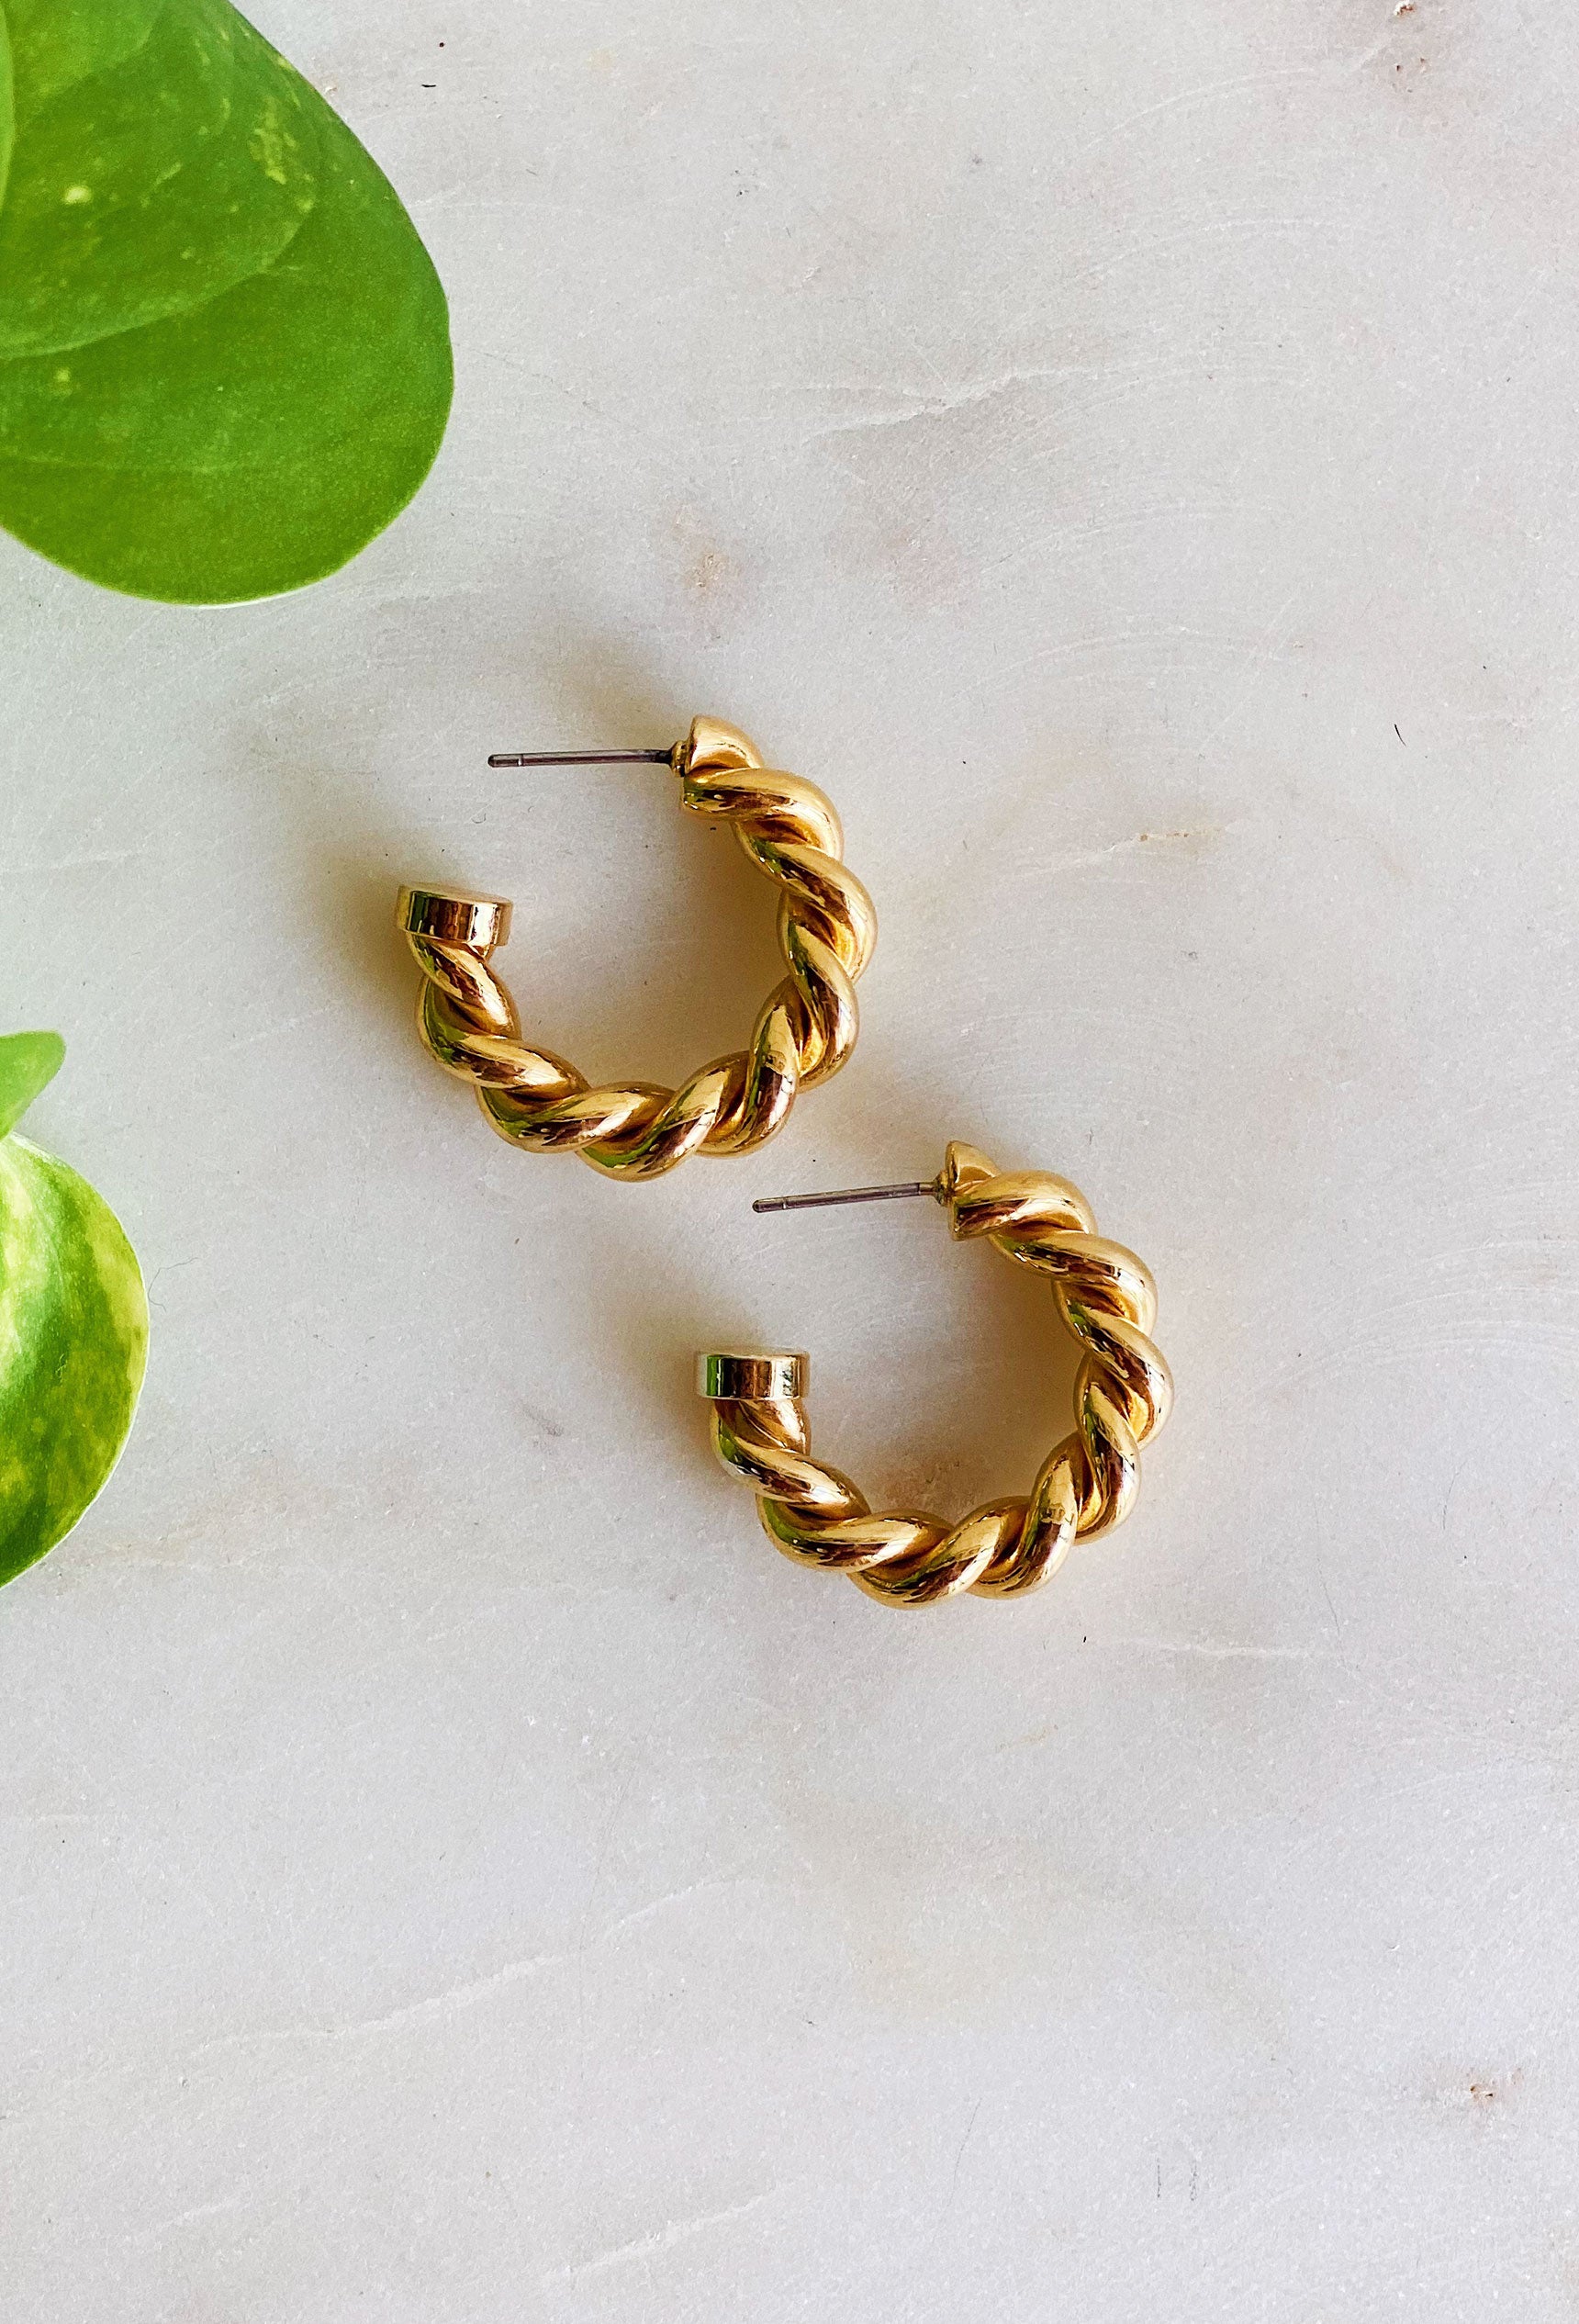 16 Pieces Small Hoop Earrings with Charms Small Cute Butterfly Moon Star  Drop Dangle Hoop Earrings for Women Girls, Metal, alloy : Amazon.in:  Jewellery